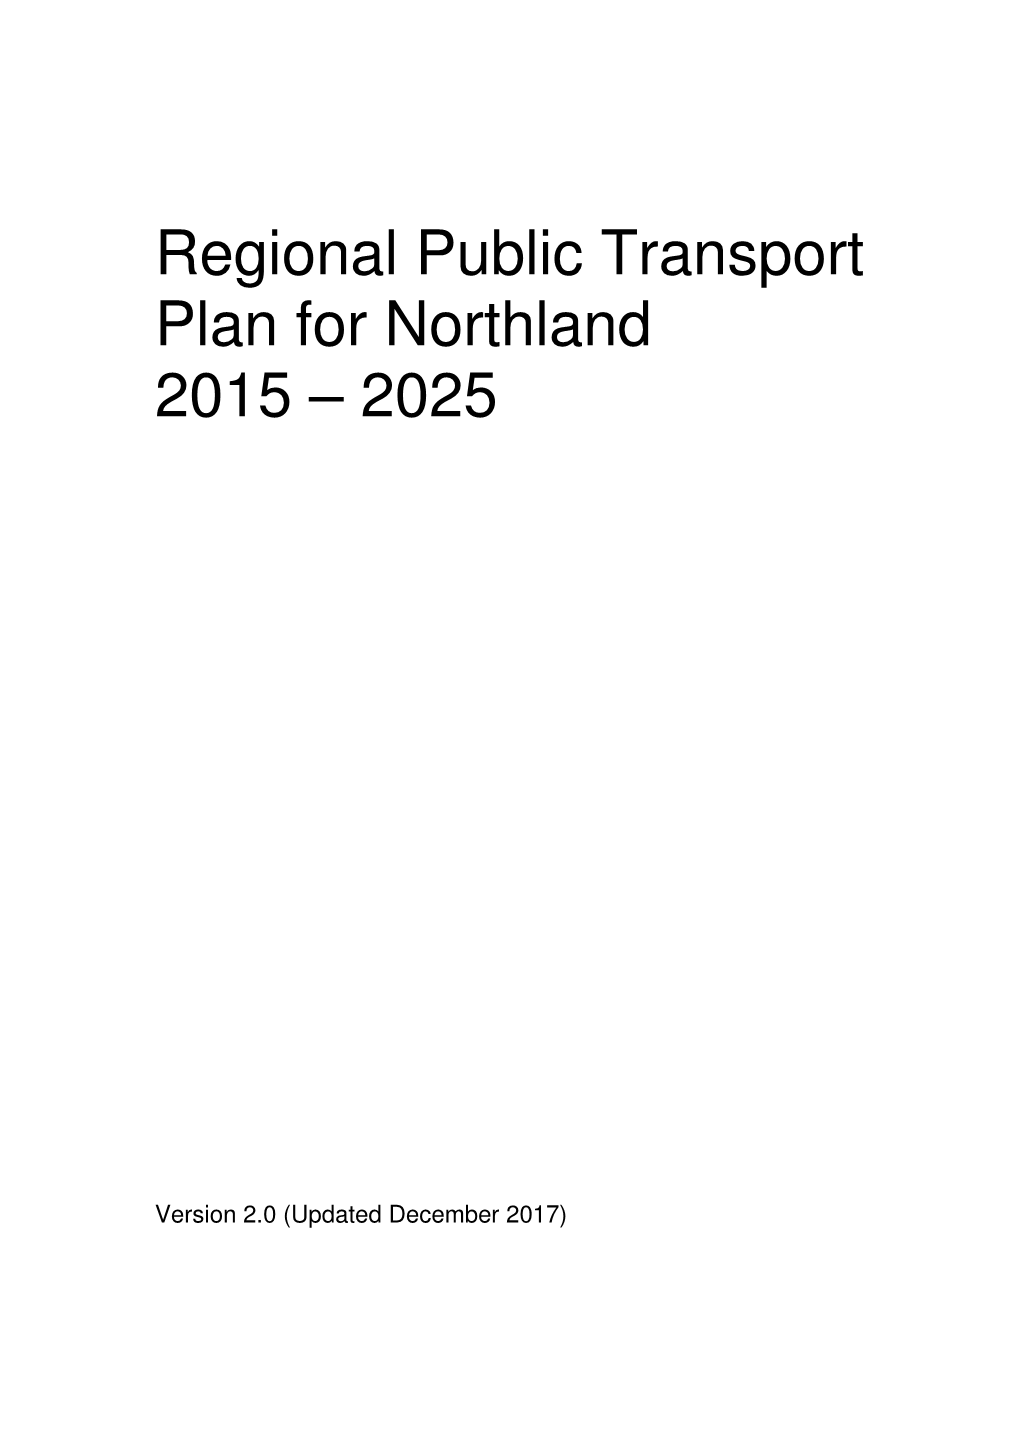 Regional Public Transport Plan 2015